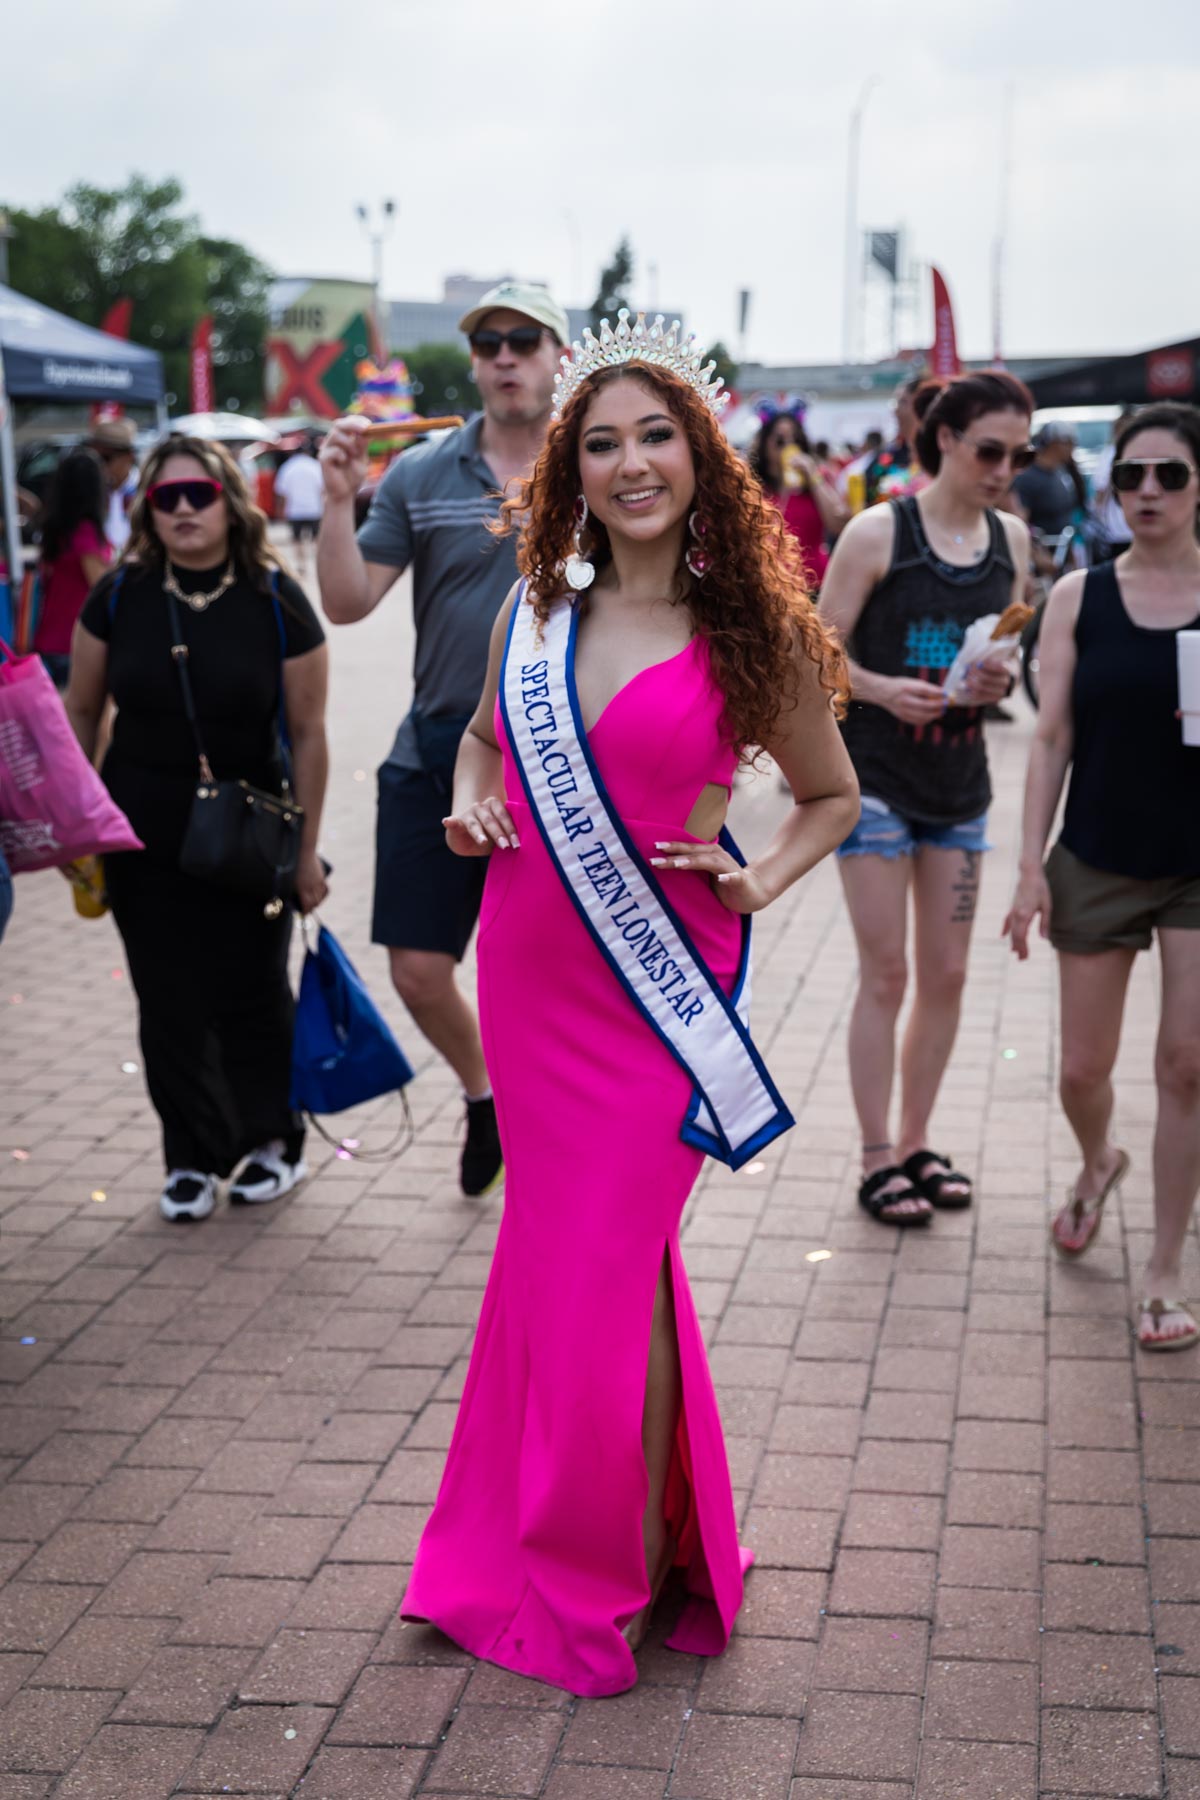 Princess wearing pink dress, sash, and tiara at Fiesta Fiesta for an article on the best Fiesta photos